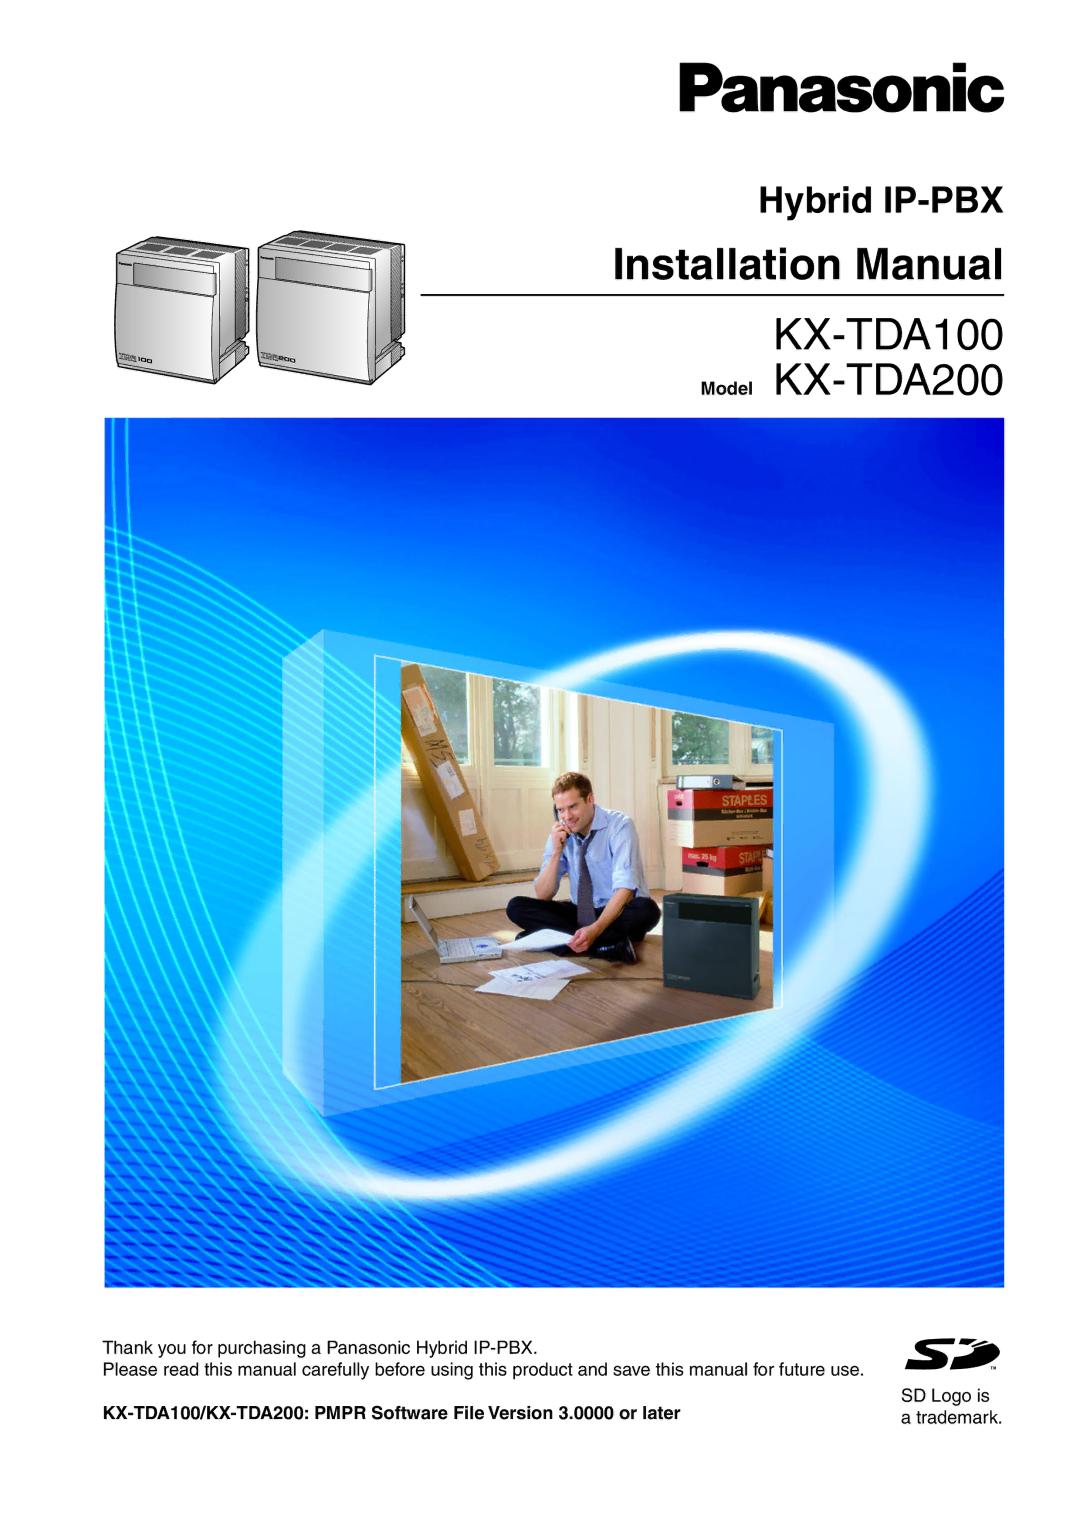 Panasonic KX-TDA100 installation manual Installation Manual, Hybrid IP-PBX 